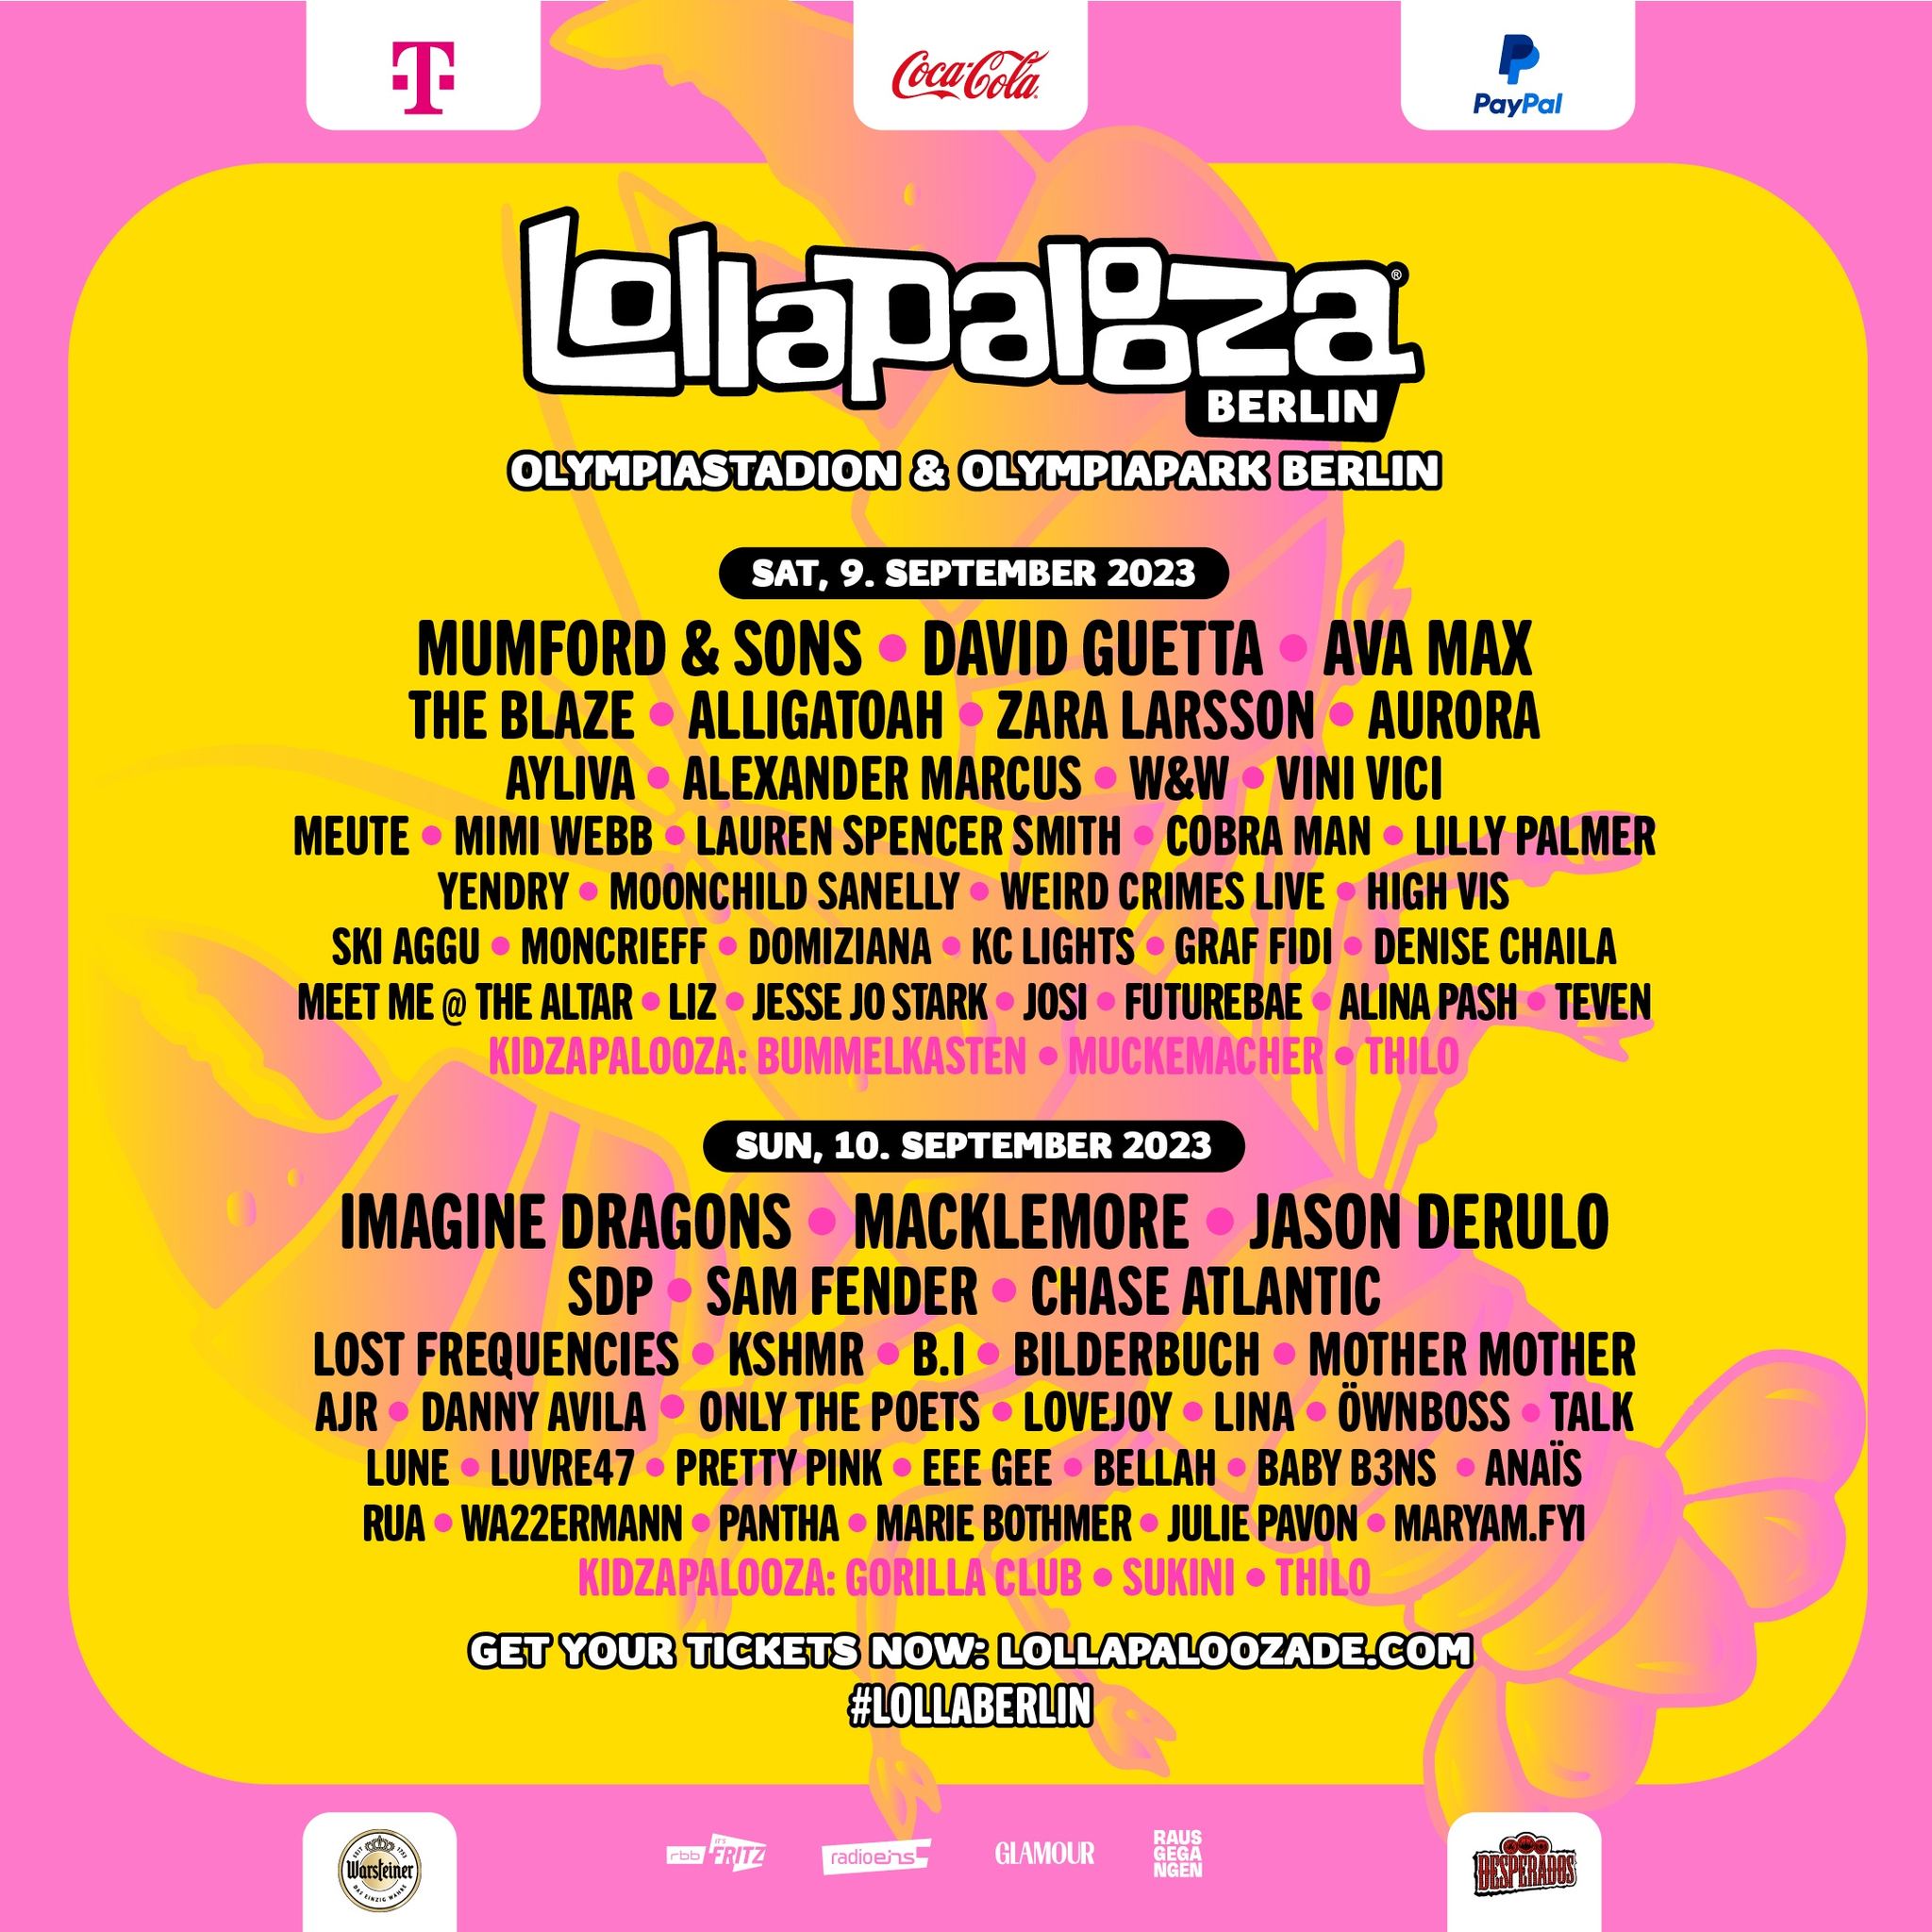 Lollapalooza Berlin Announces Surprise Inclusion of Kpop Artist B.I